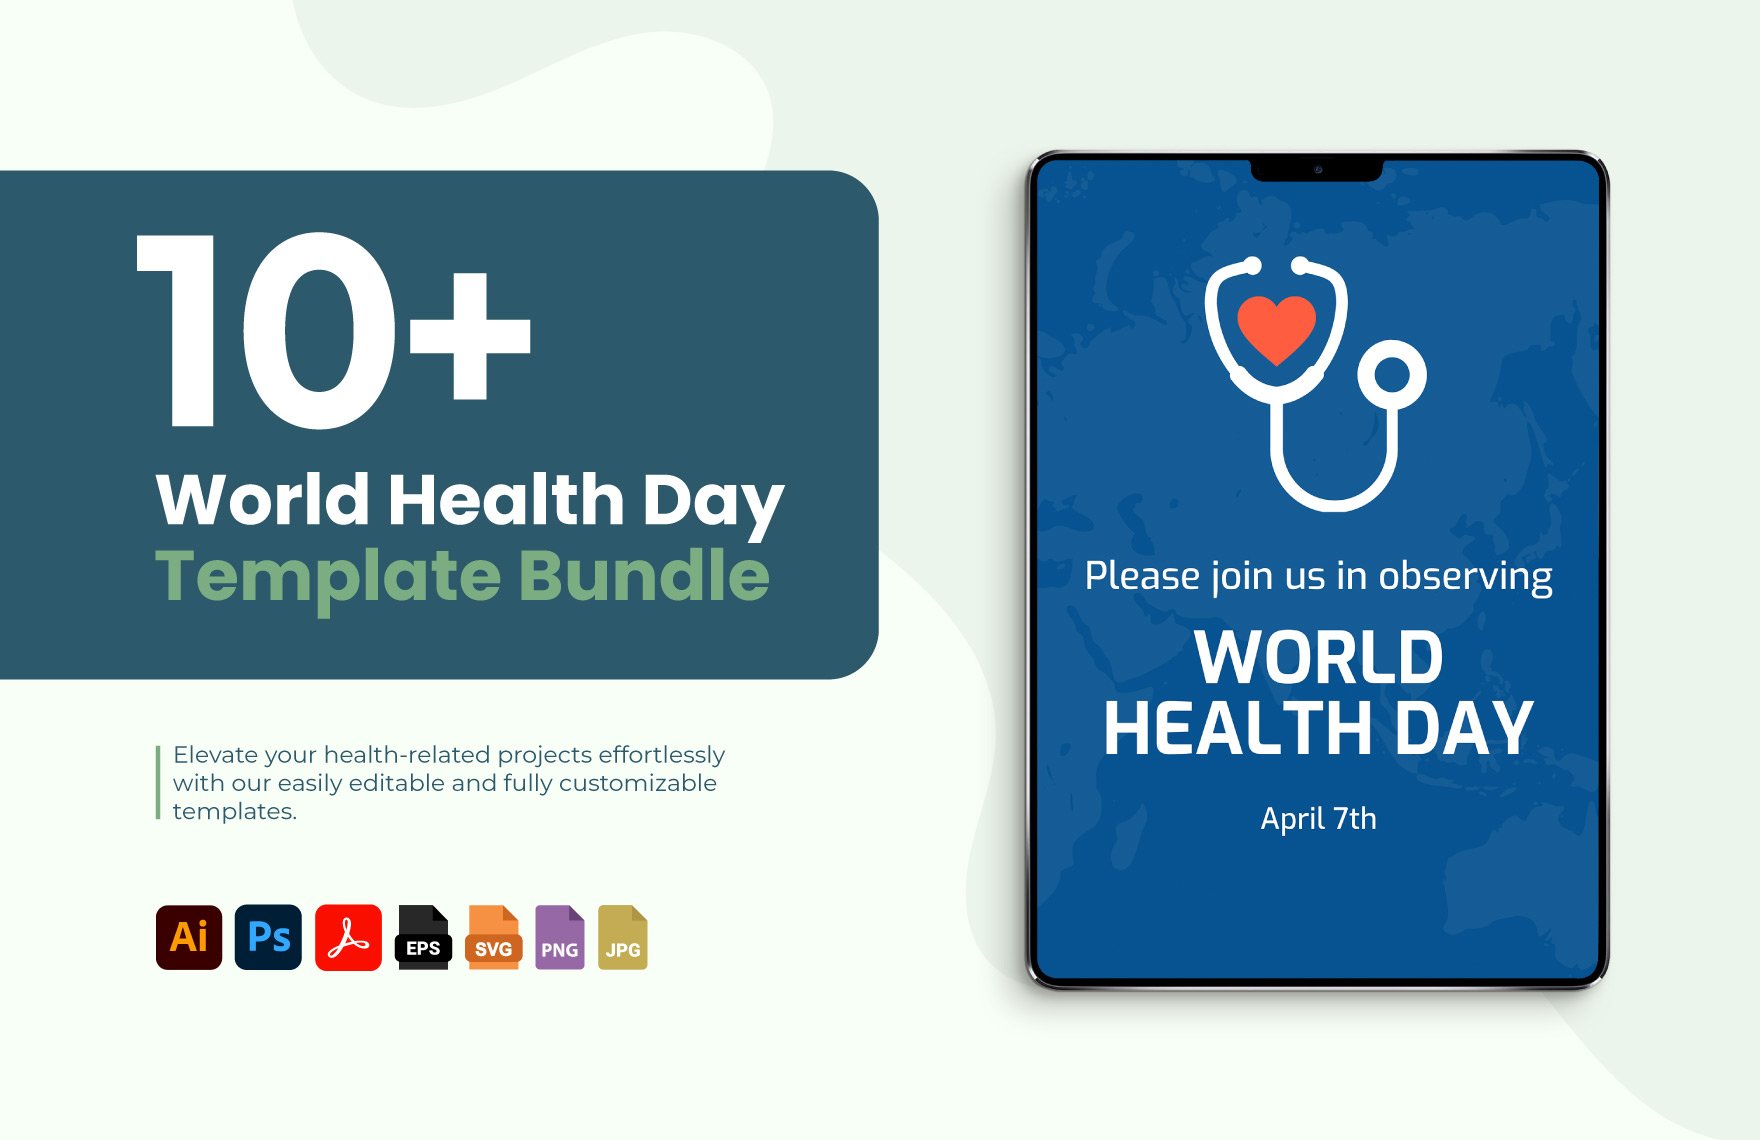 Free 10+ World Health Day Template Bundle in PDF, Illustrator, PSD, EPS, SVG, JPG, PNG